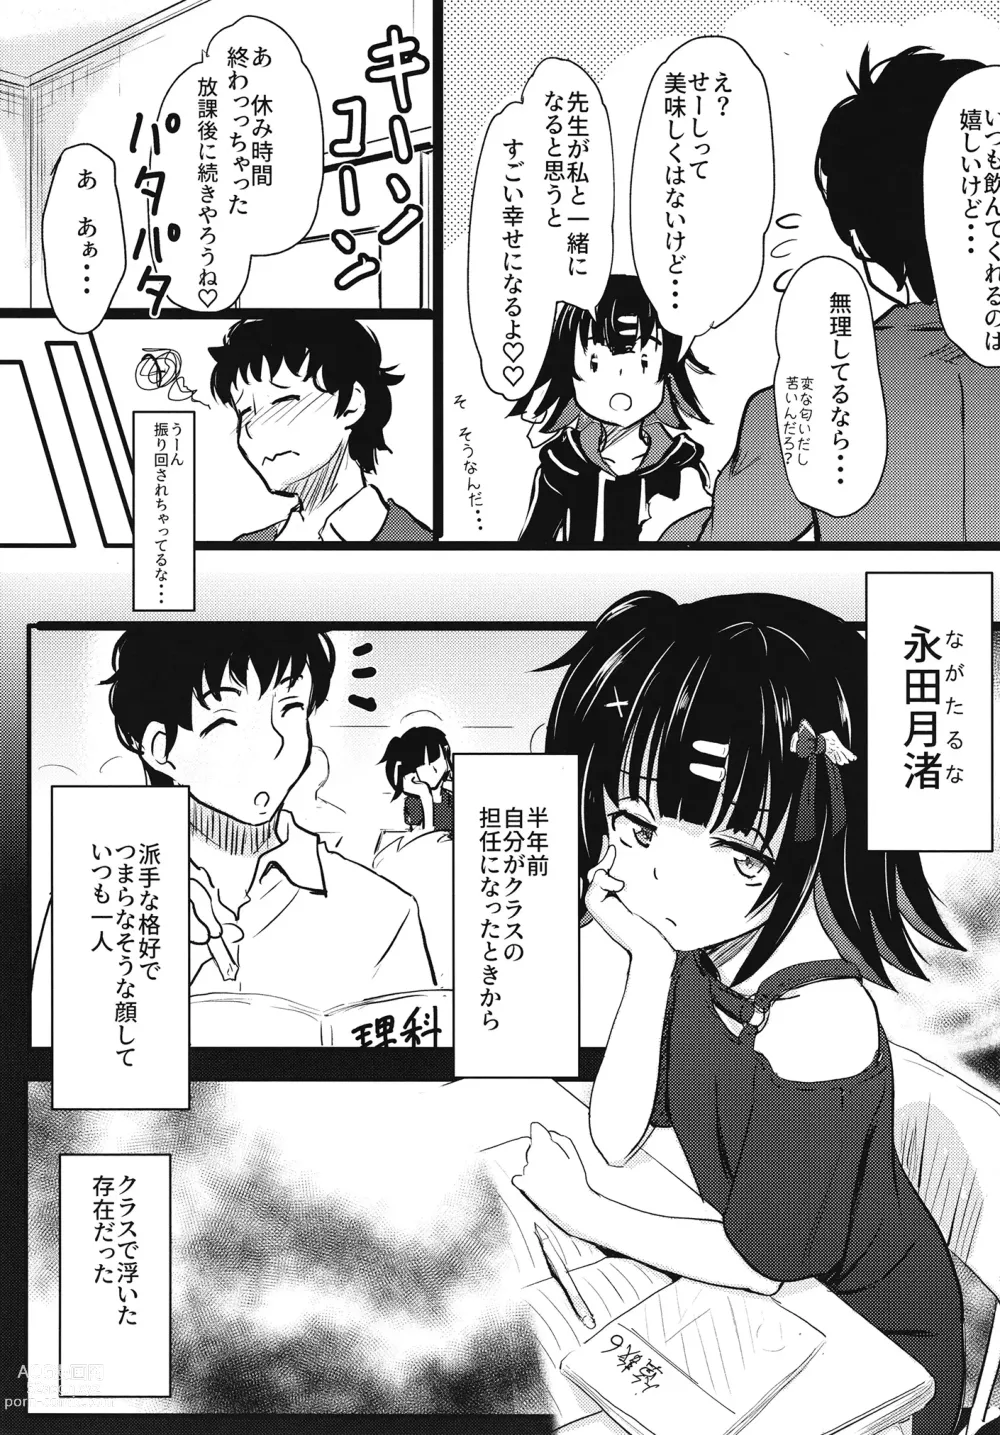 Page 8 of doujinshi Chicchakute Omoi Kanojo